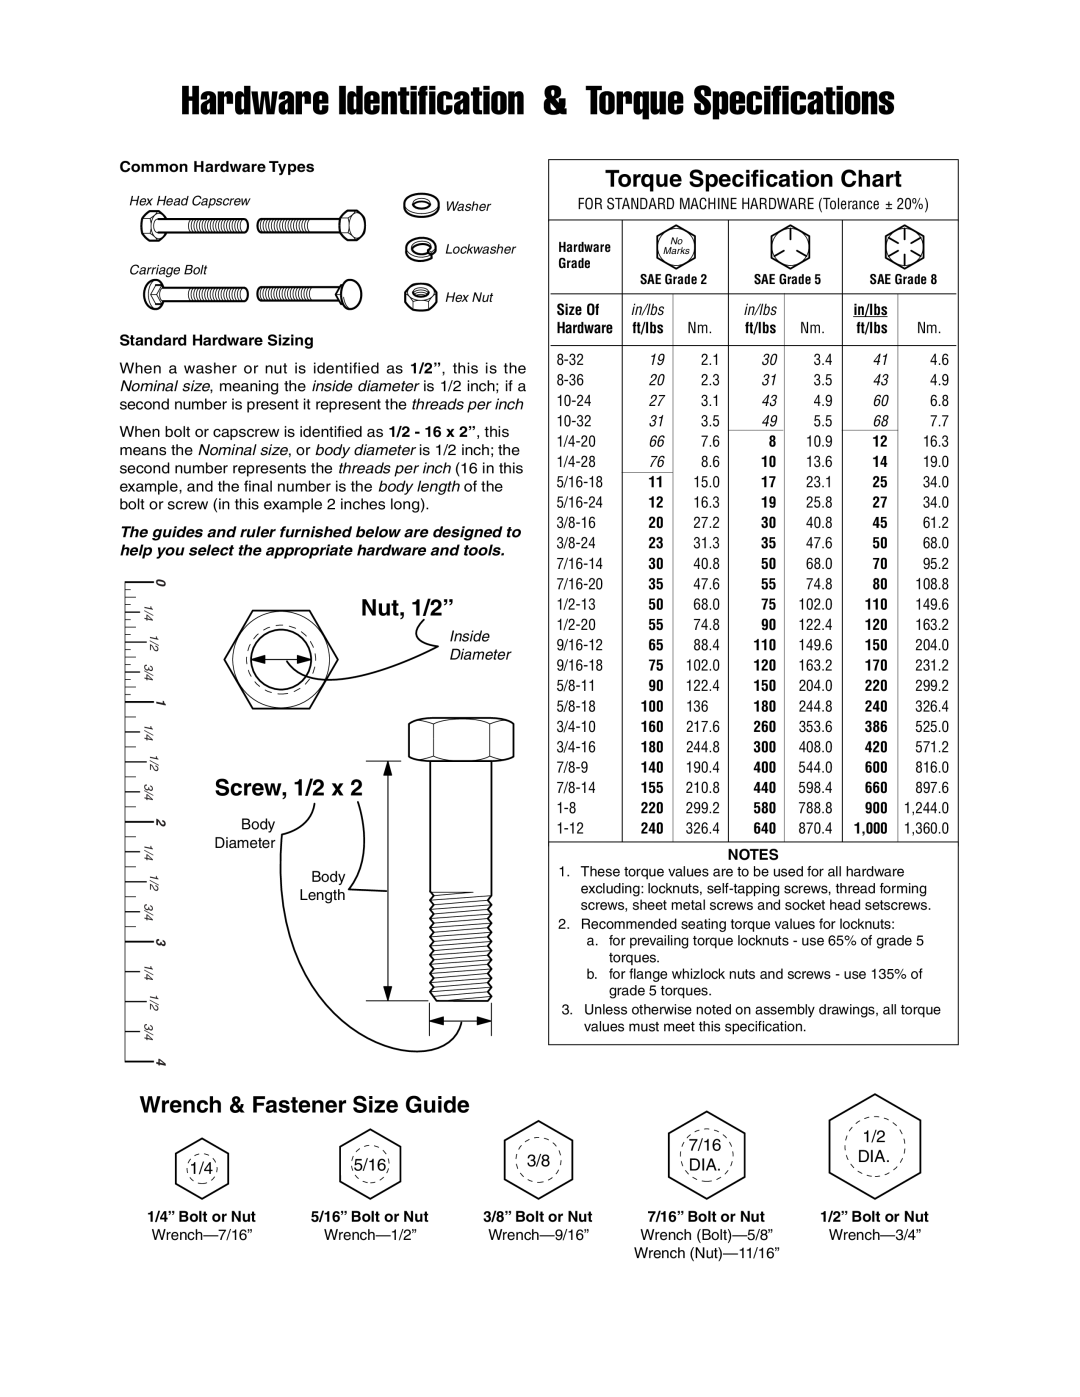 Simplicity 1730319 7/16, 5/16, Hardware Identification & Torque Specifications, Torque Specification Chart, Nut, 1/2” 